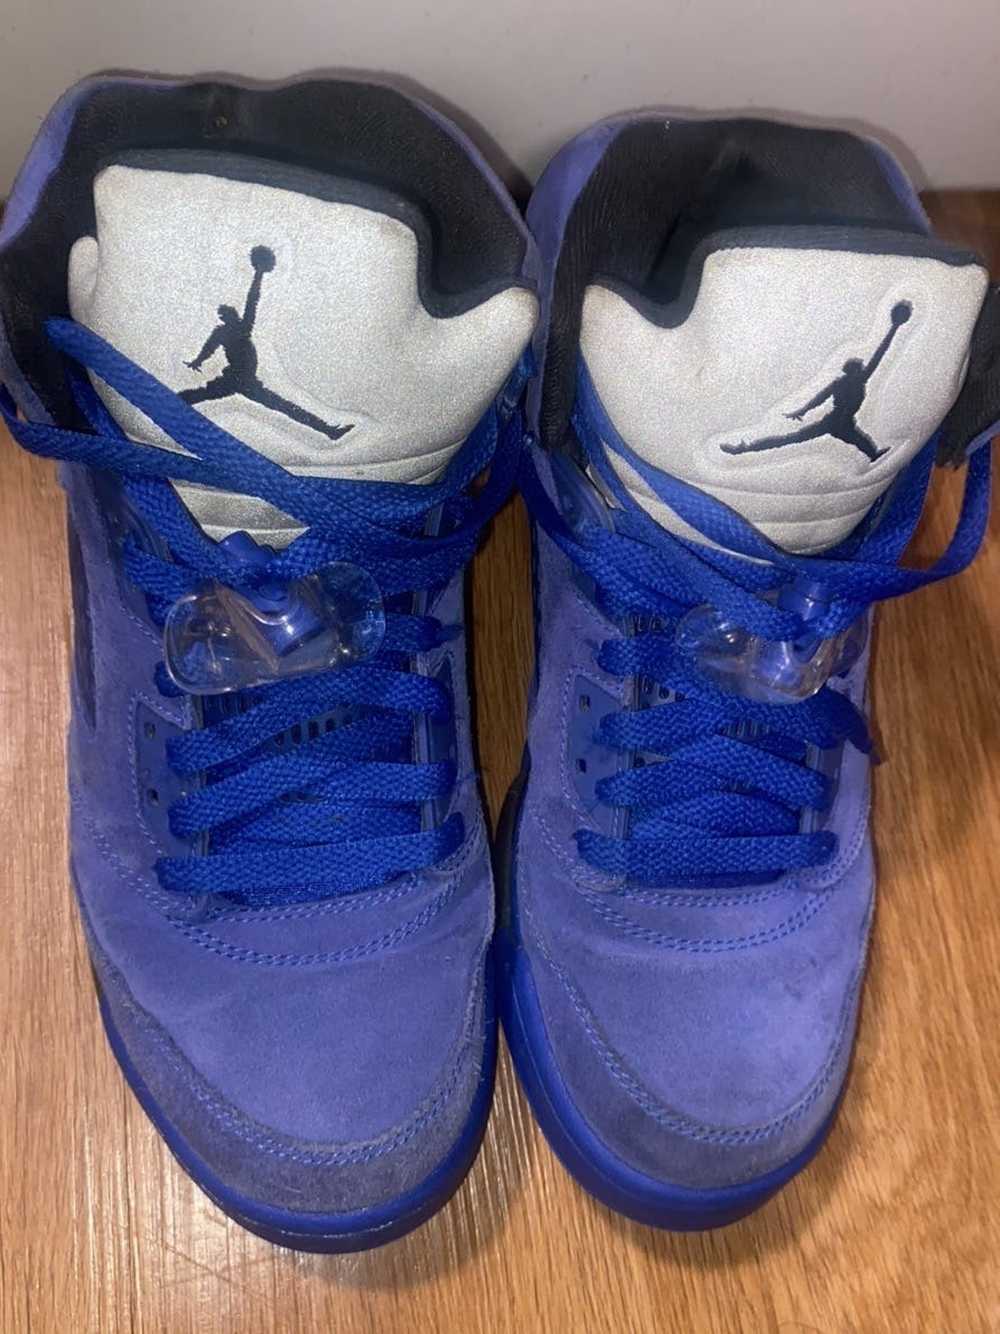 Jordan Brand All Blue Retro Jordan 5s - image 1